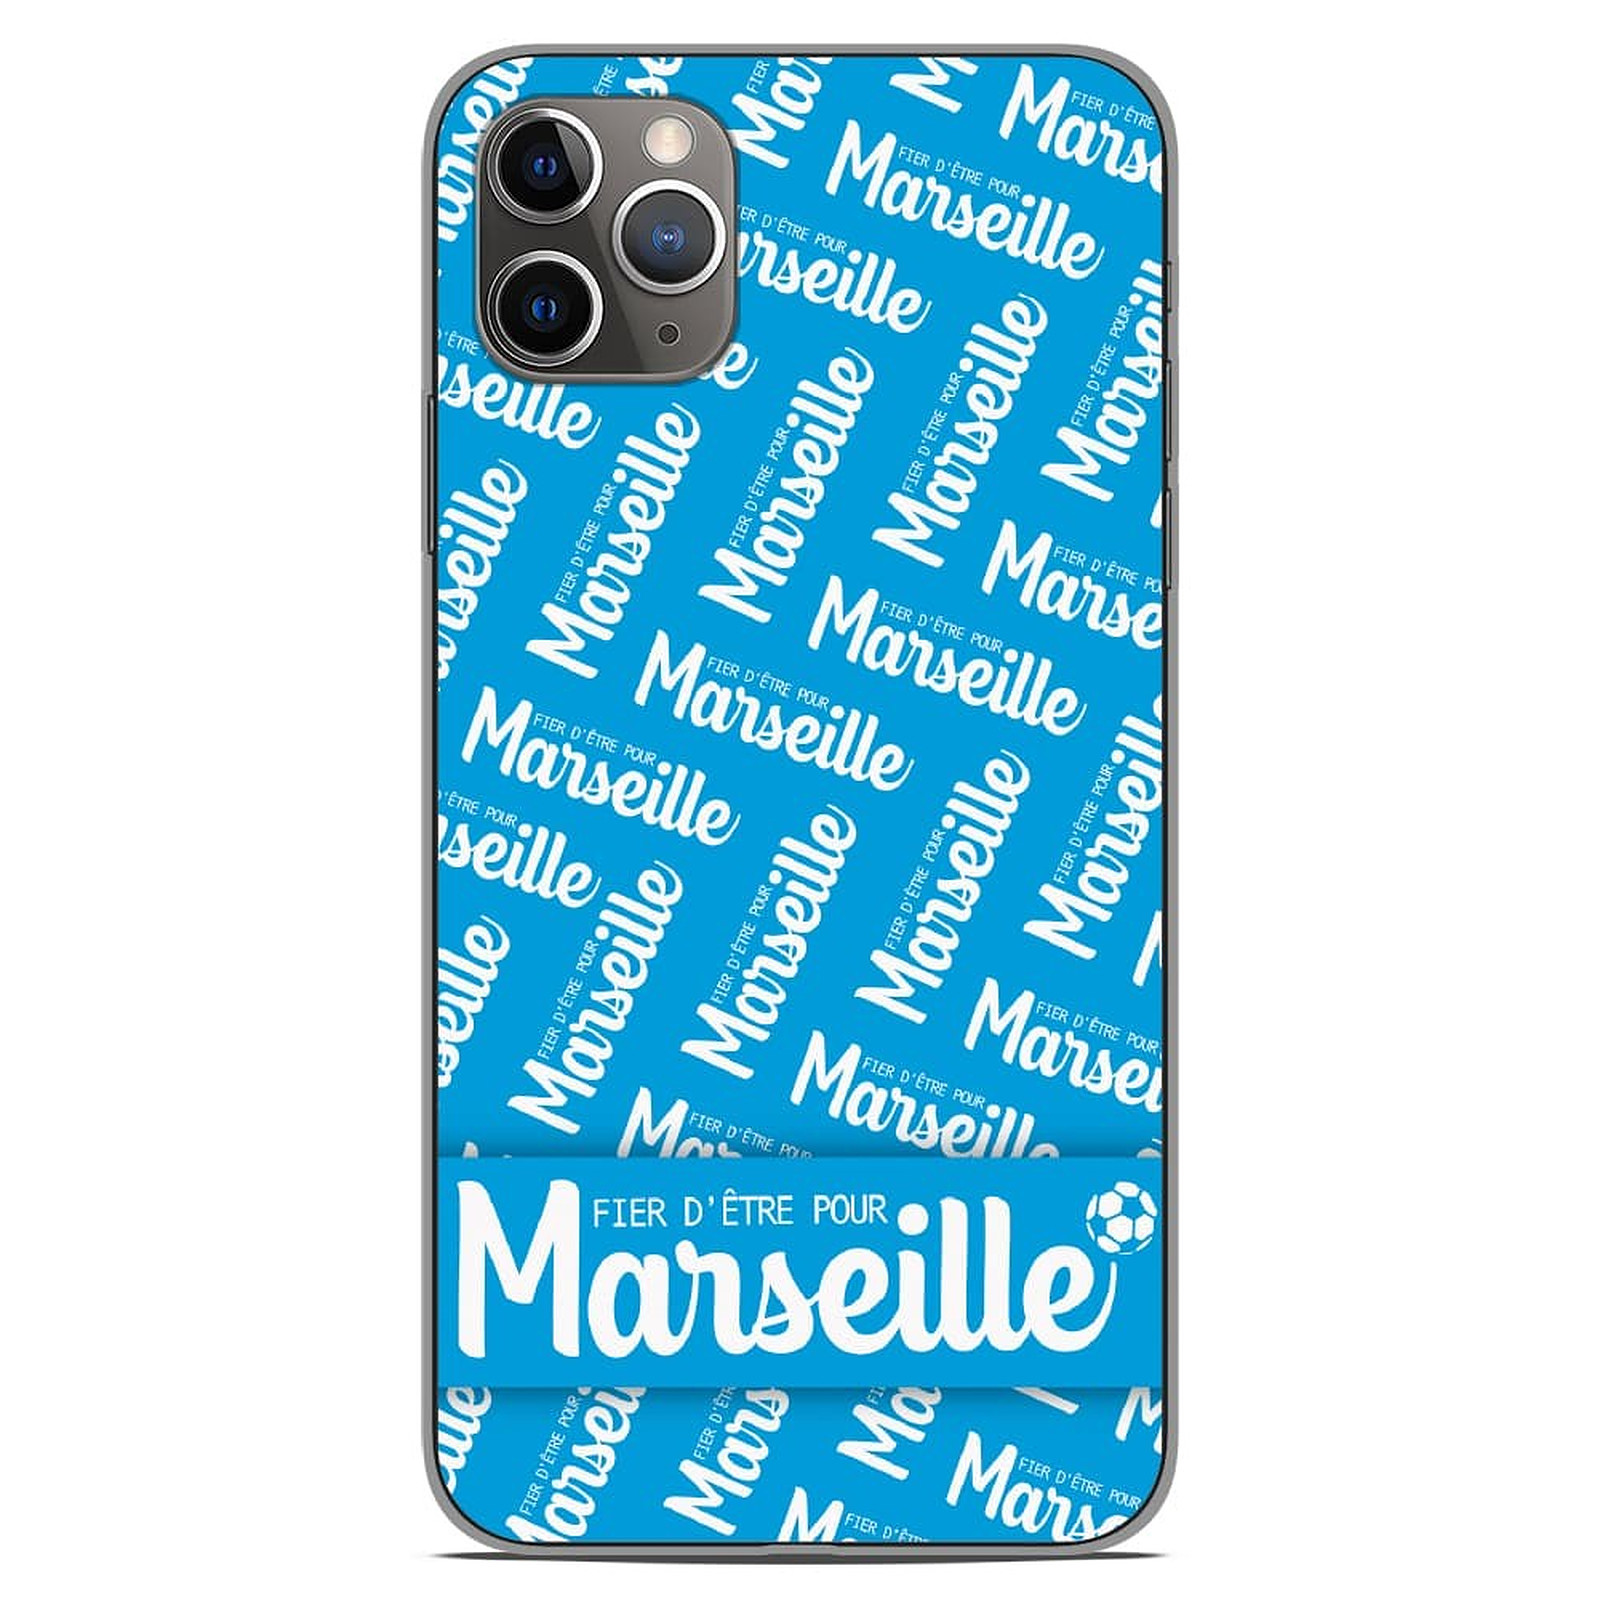 1001 Coques Coque silicone gel Apple iPhone 11 Pro Max motif Fier d'etre pour Marseille - Coque telephone 1001Coques